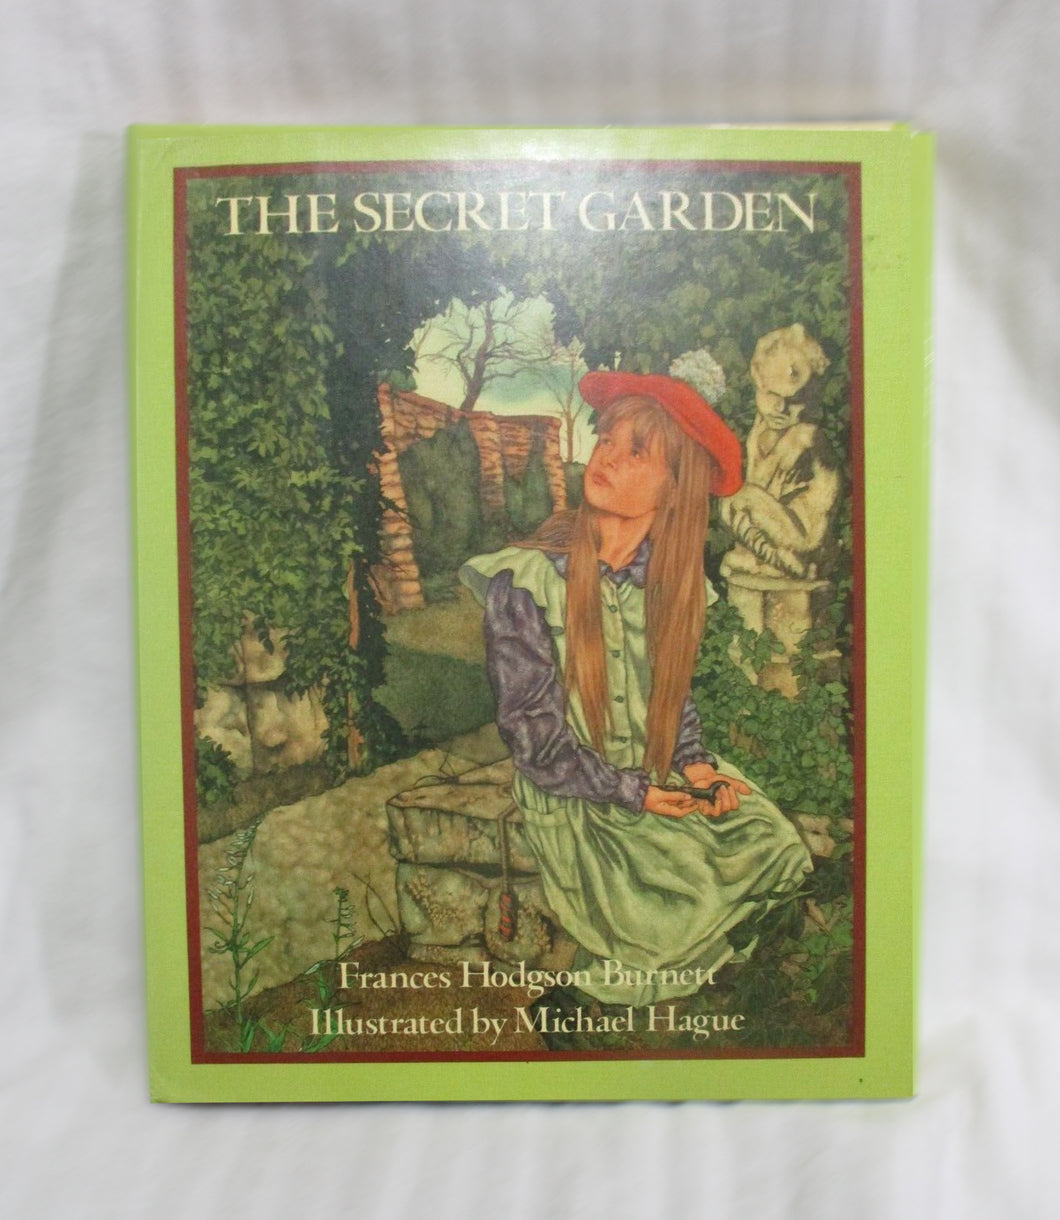 Vintage 1987- The Secret Garden, Frances Hodgson Burnett, Illustrated by Michael Hague - Hardback Book